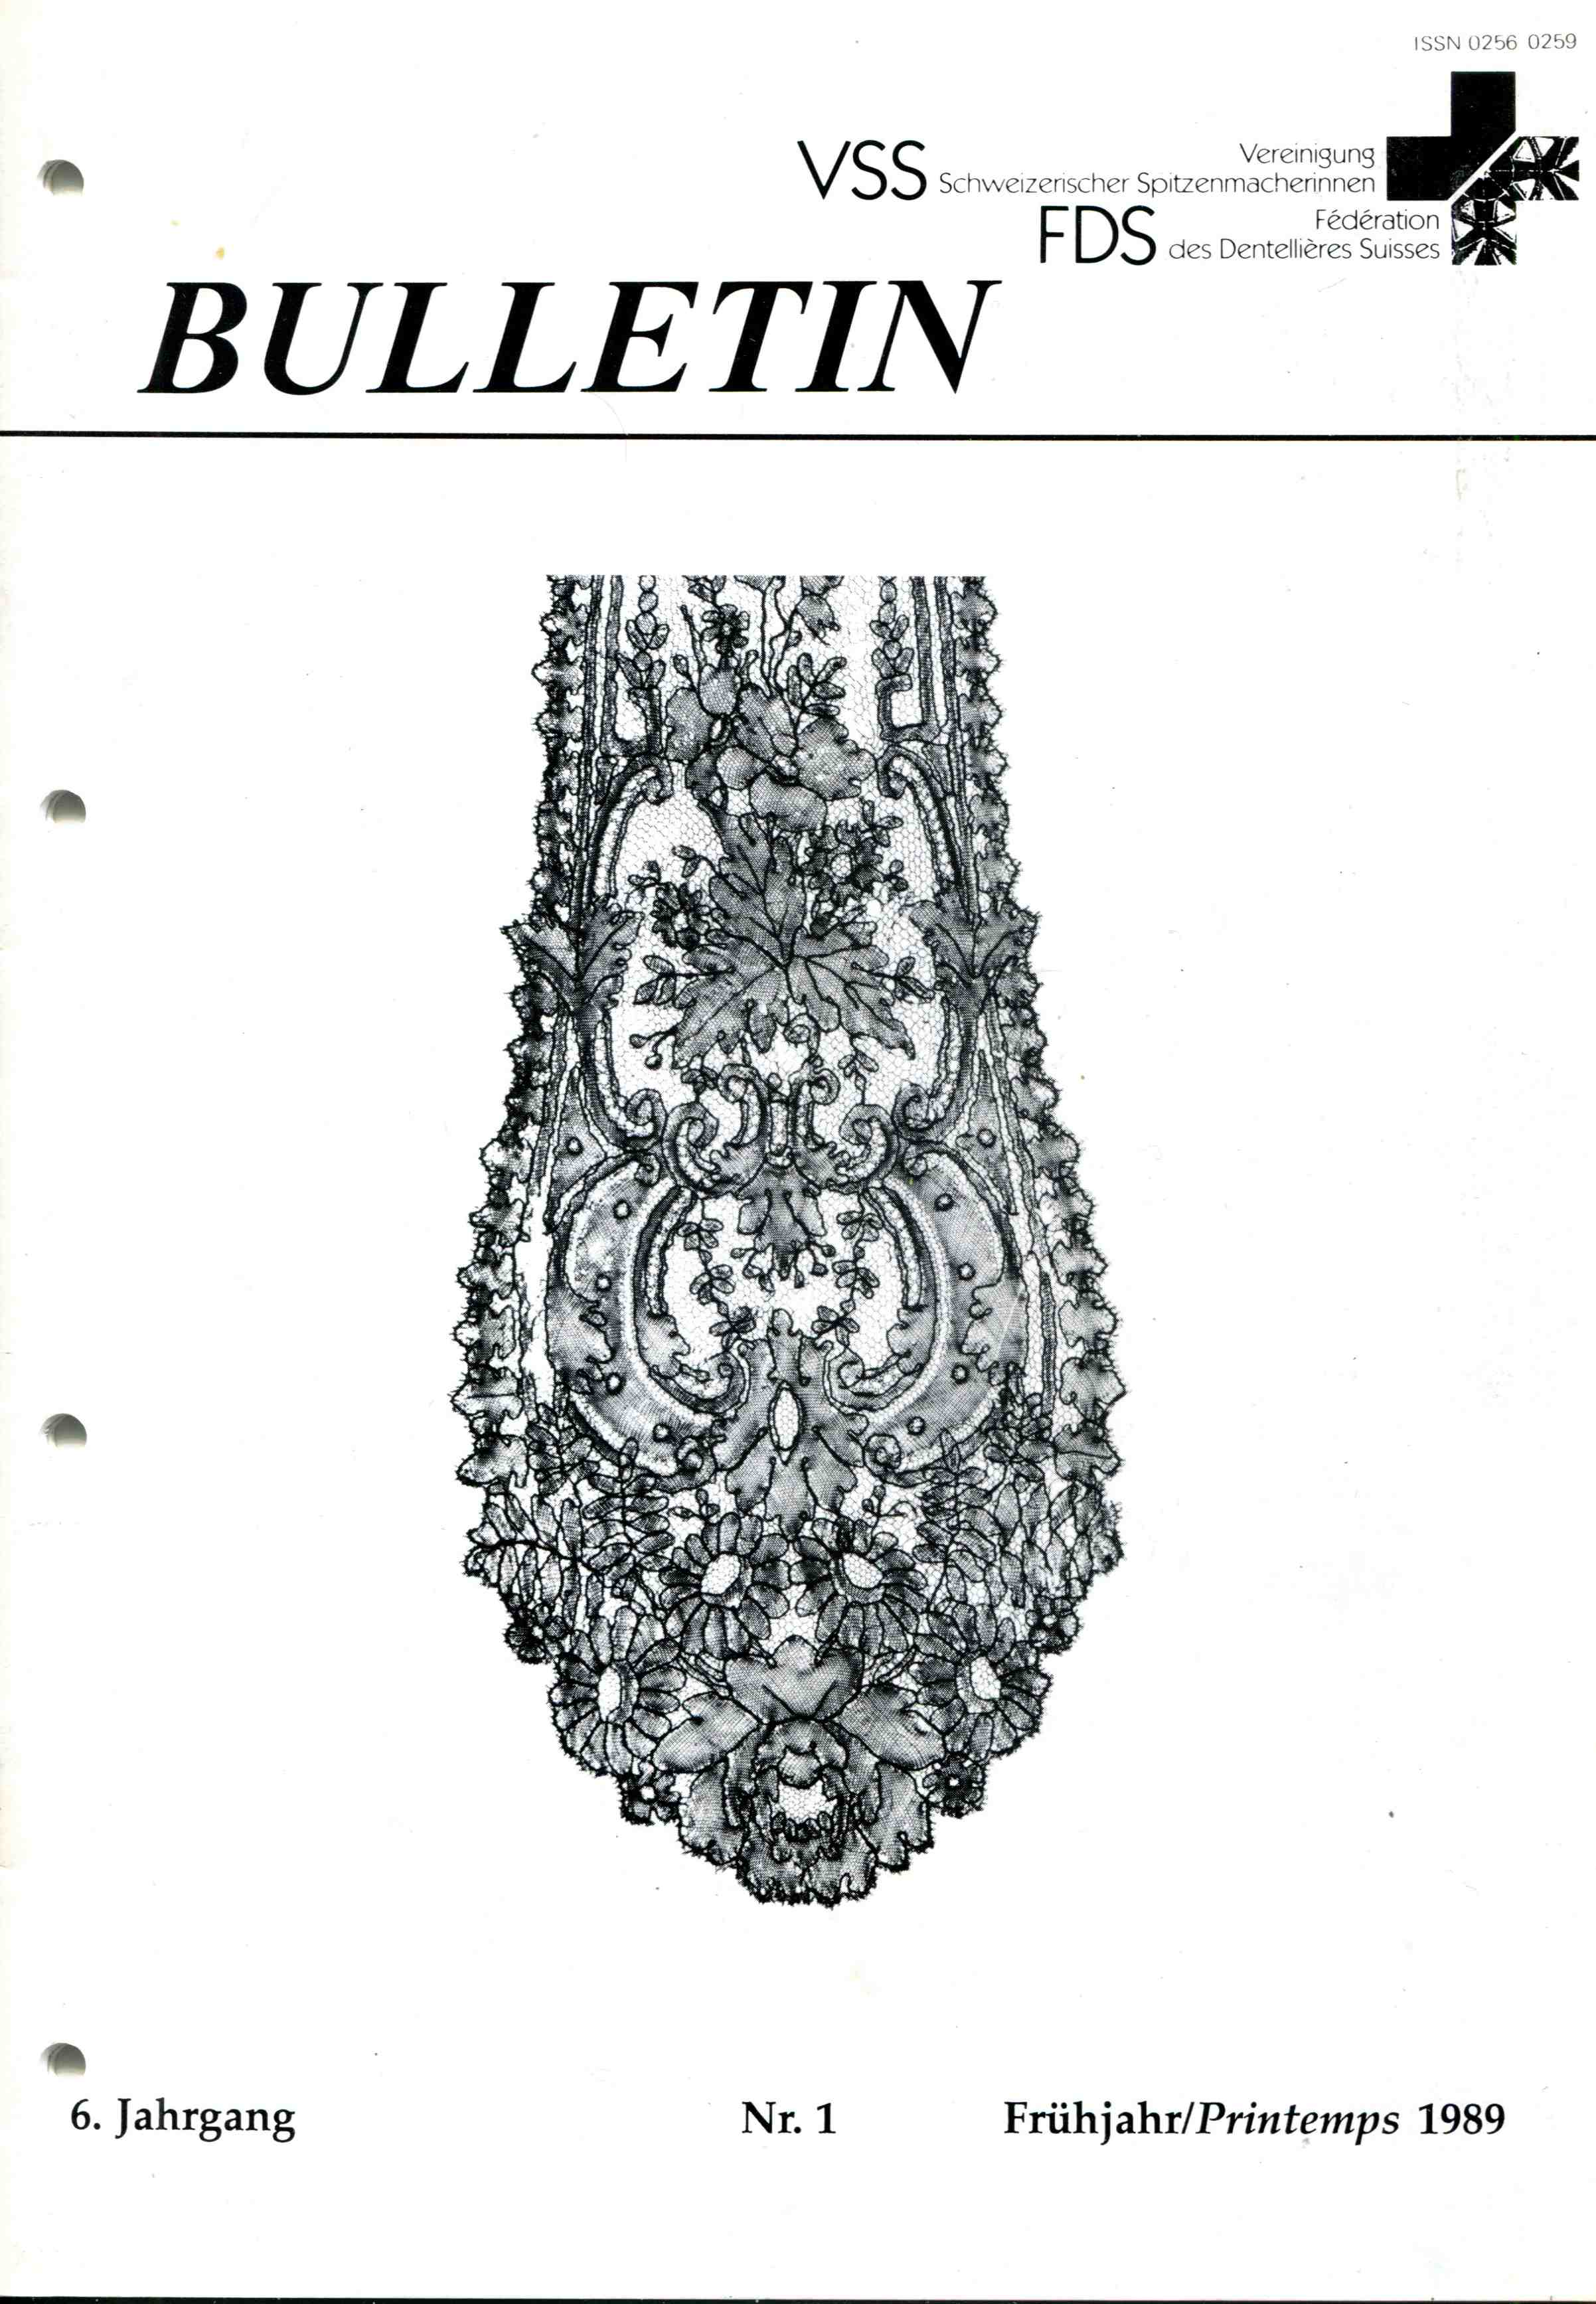 Bulletin VSS 6. Jahrgang Nr. 1 Frhjahr 1989